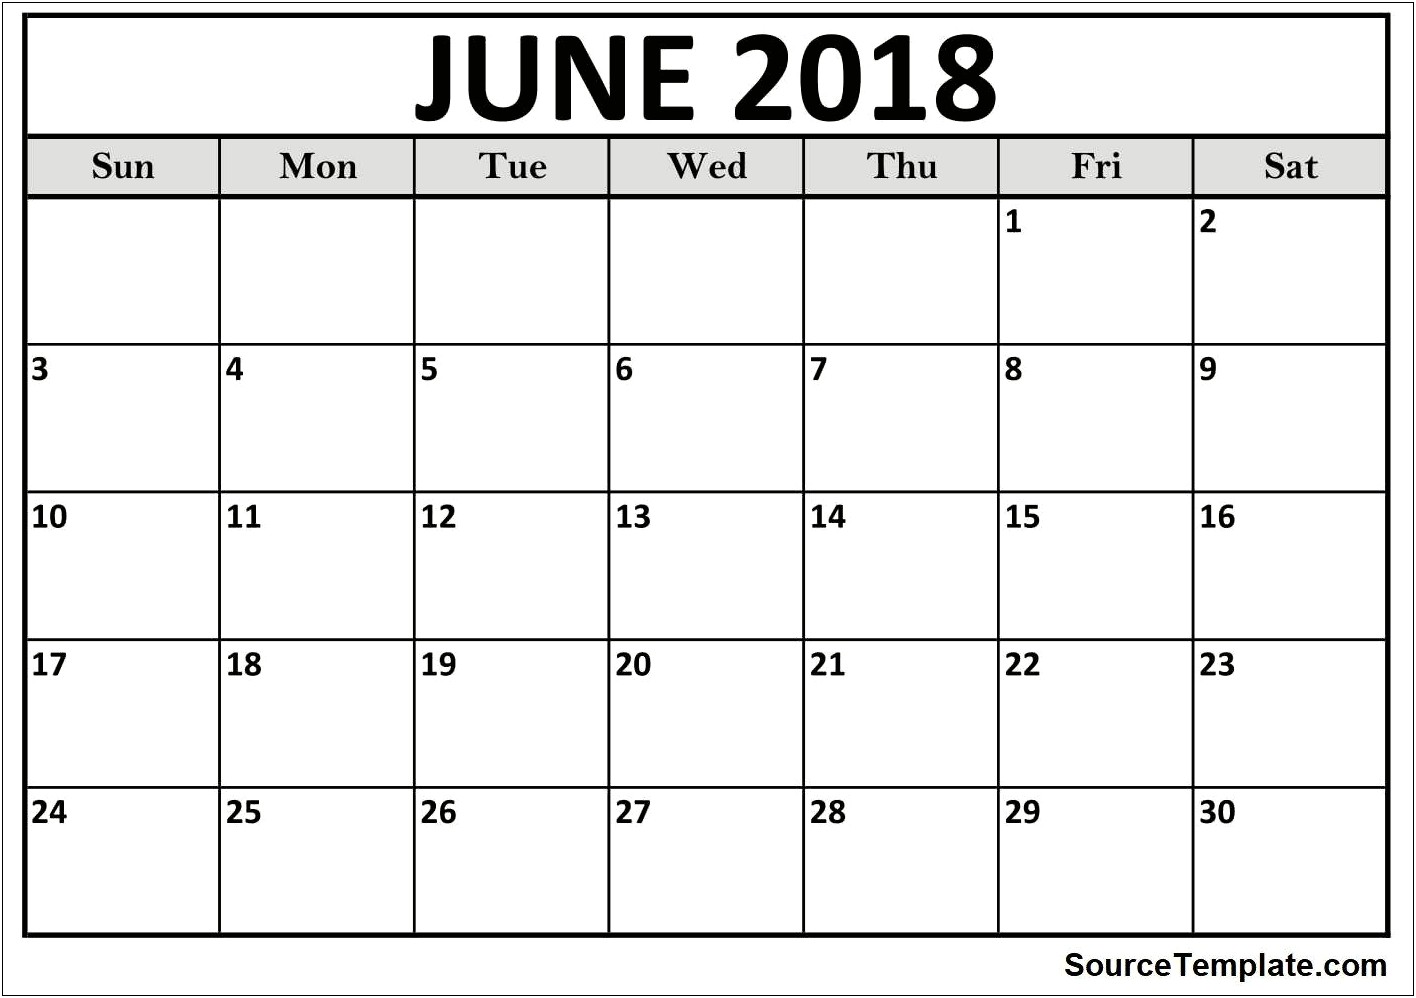 Free Monthly Calendar Template June 2018